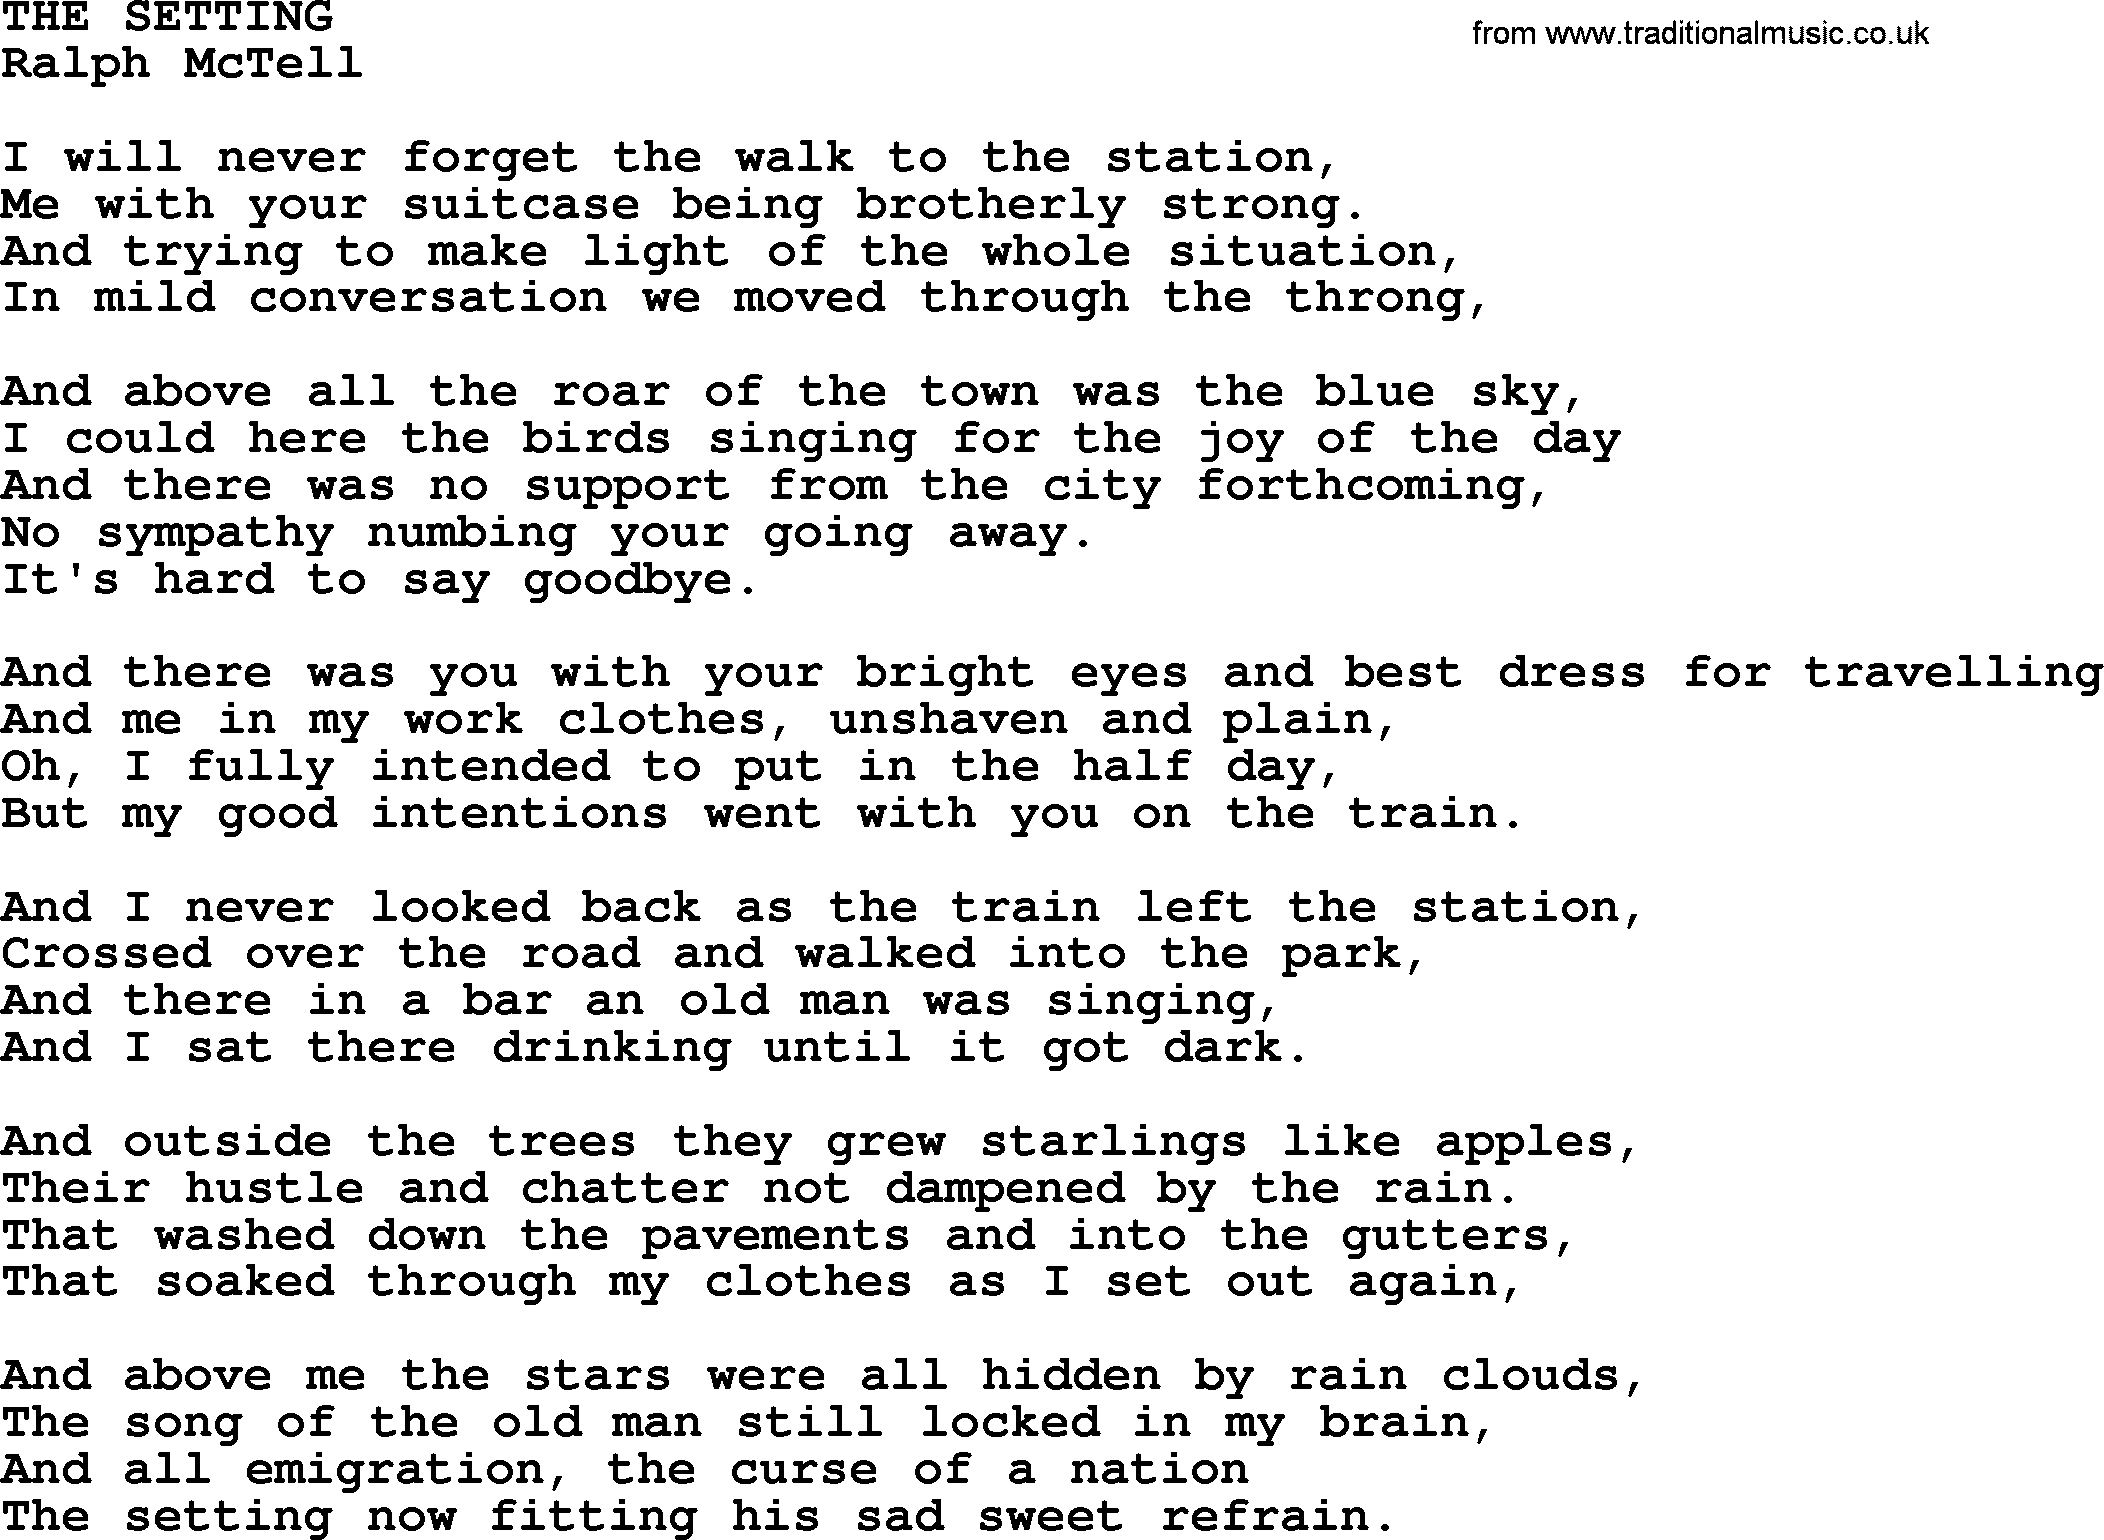 Ralph McTell Song: The Setting, lyrics